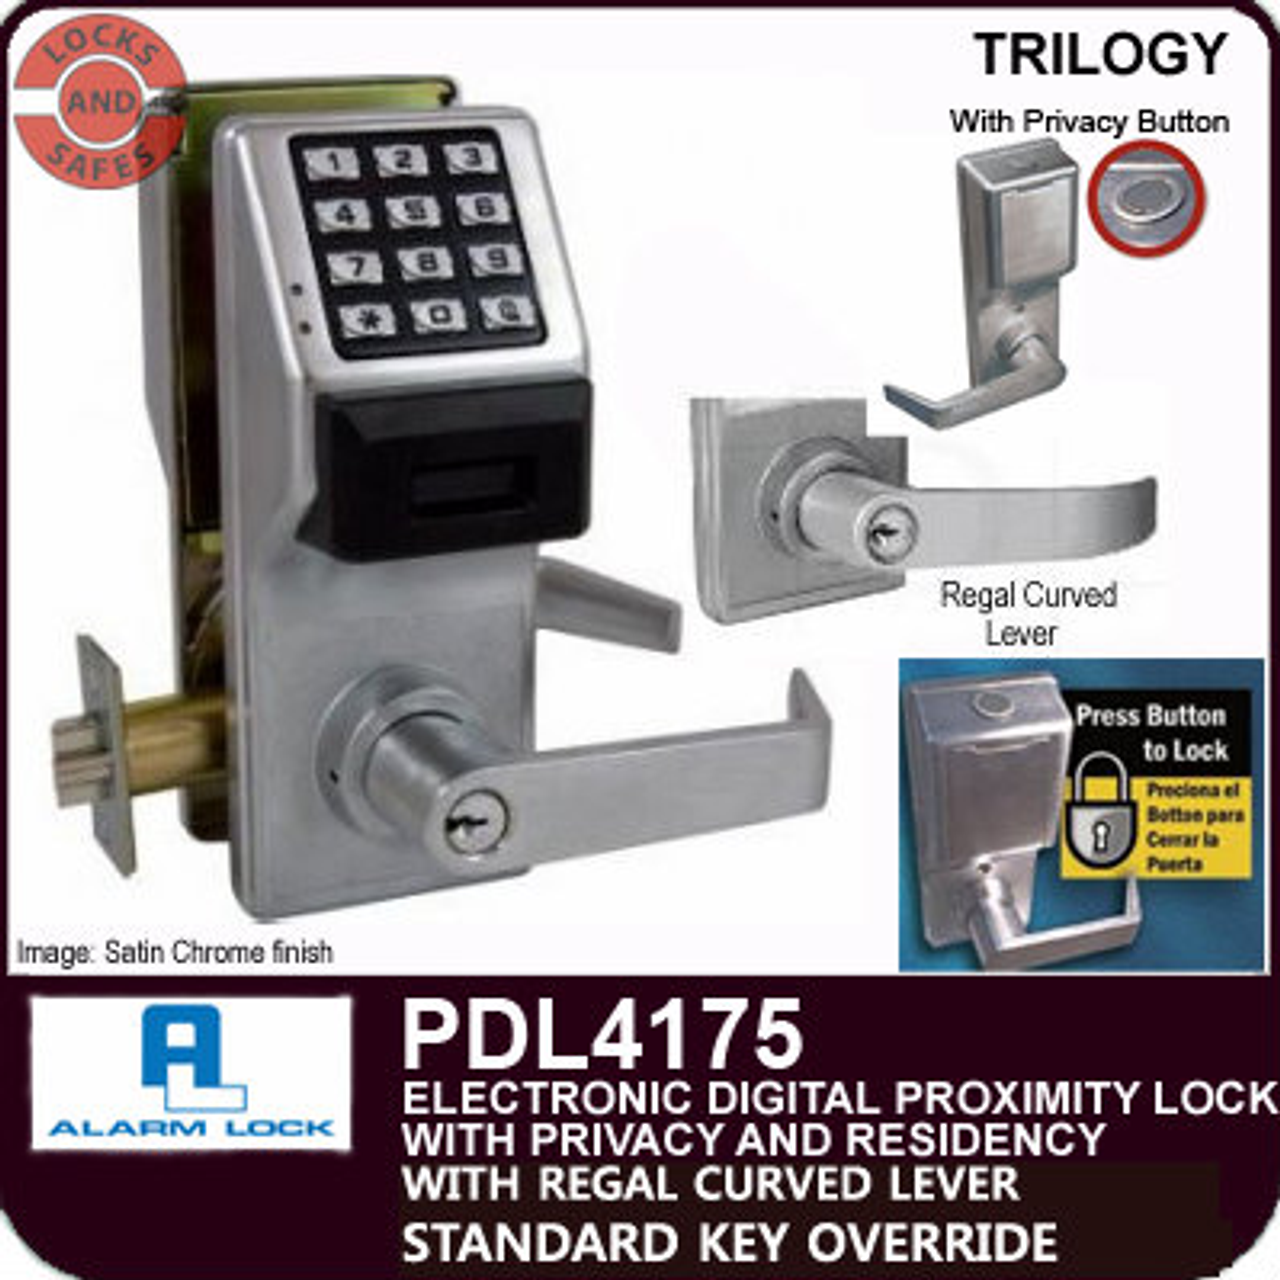 Alarm Lock Trilogy PDL4175 DIGITAL PROXIMITY LOCKS